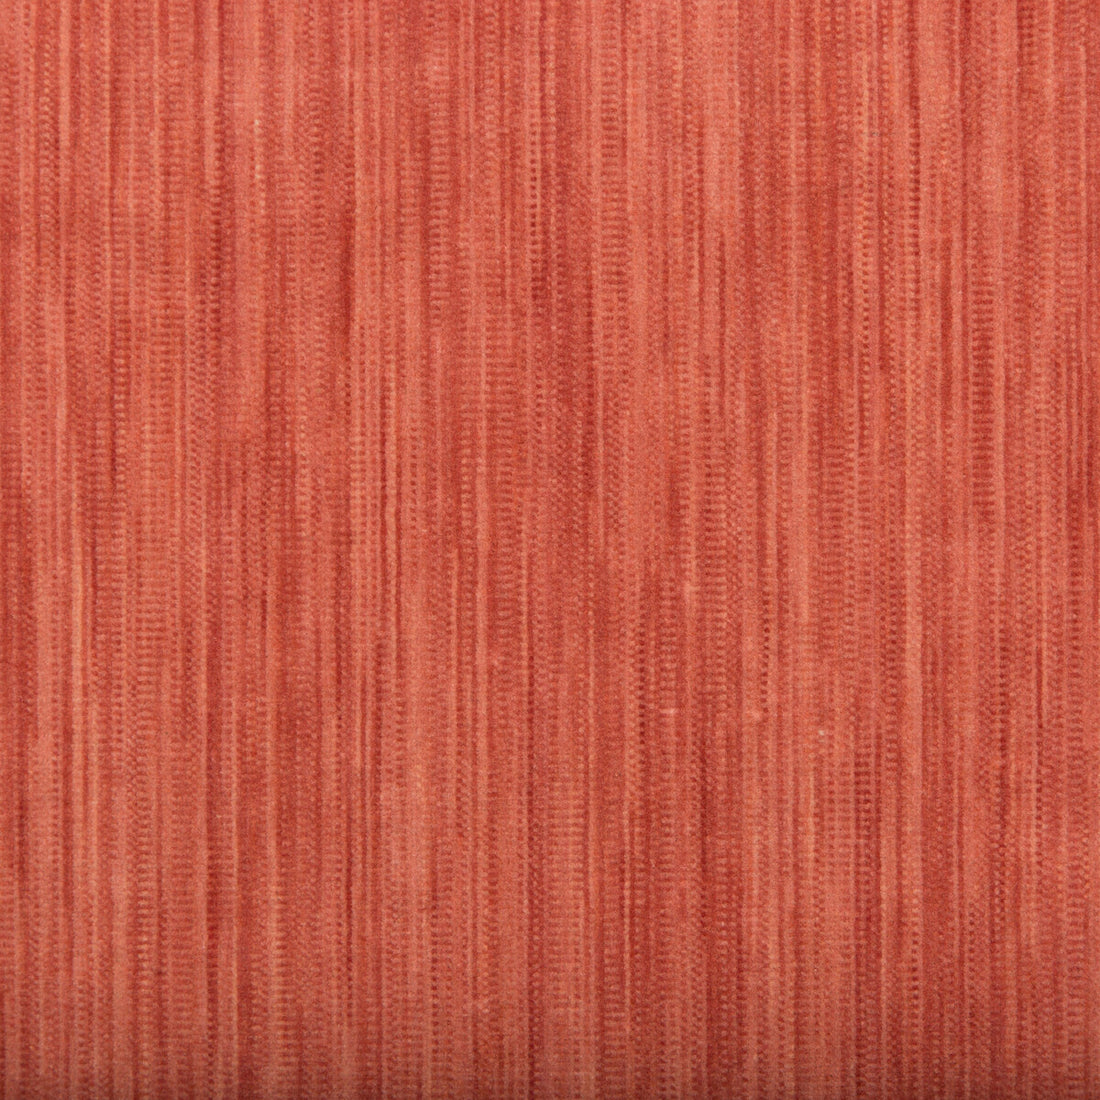 Barnwell Velvet fabric in petal color - pattern 2020180.717.0 - by Lee Jofa in the Barnwell Velvet collection